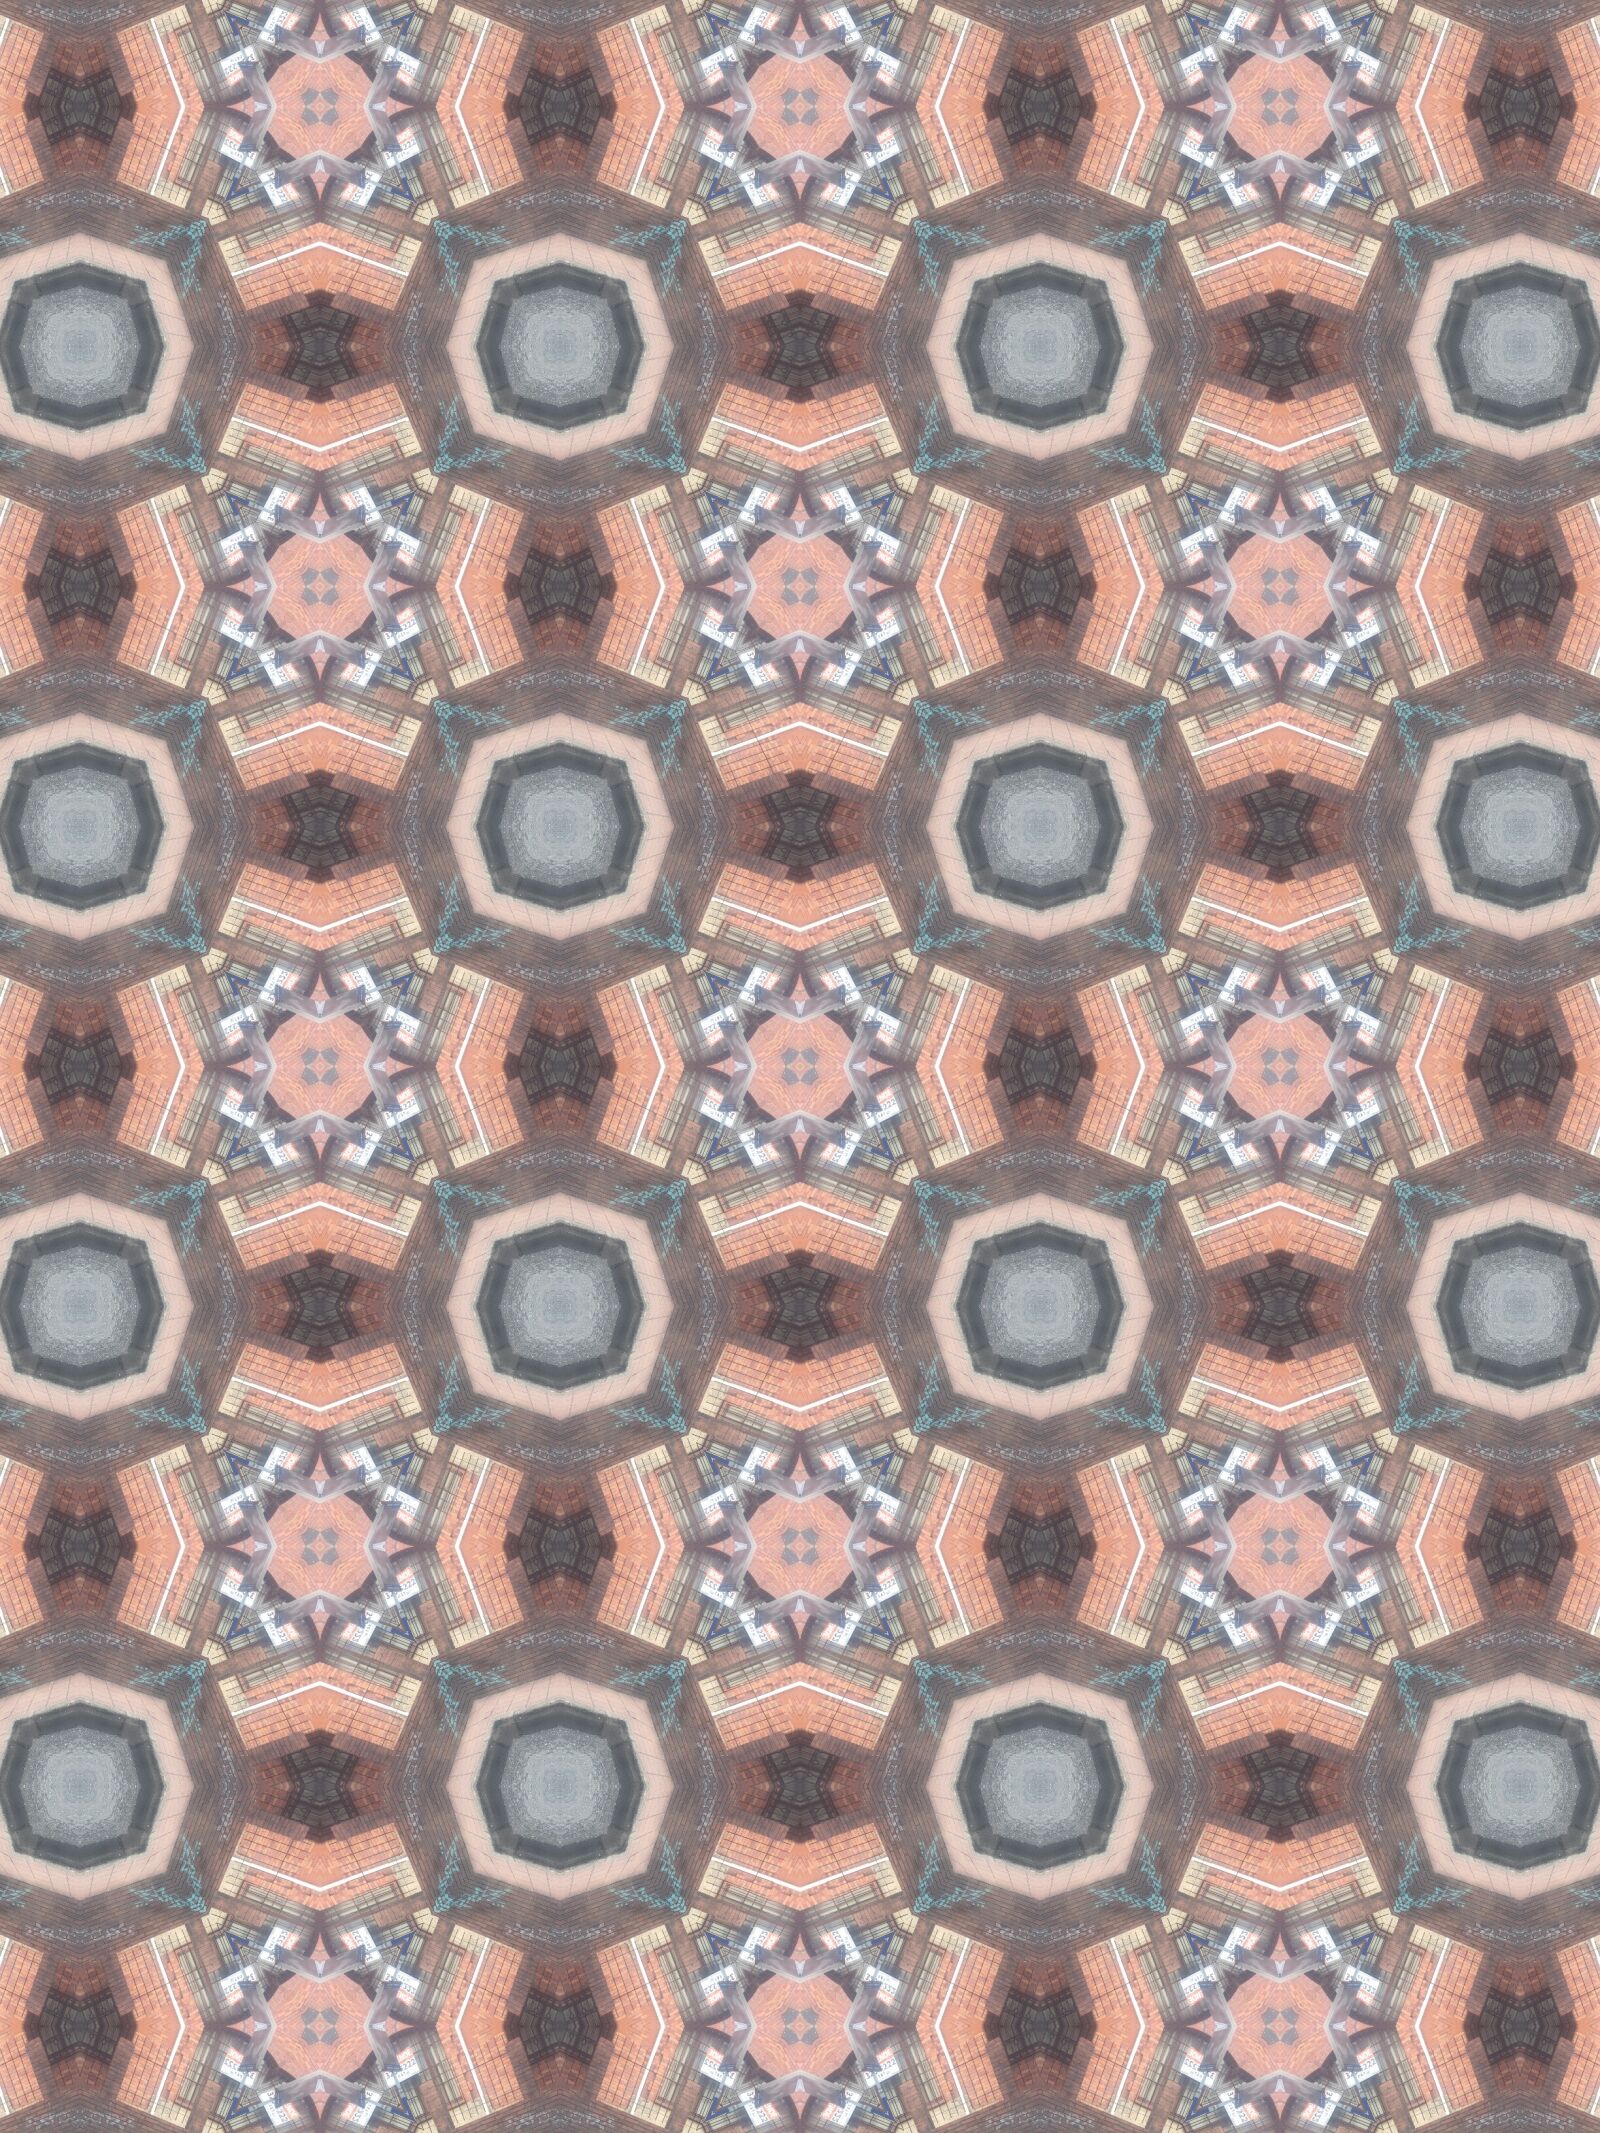 Dapper Owl KaleidaCam + iPhone 6 back camera 4.15mm f/2.2 sample photo. Tile, pattern, moroccan photography